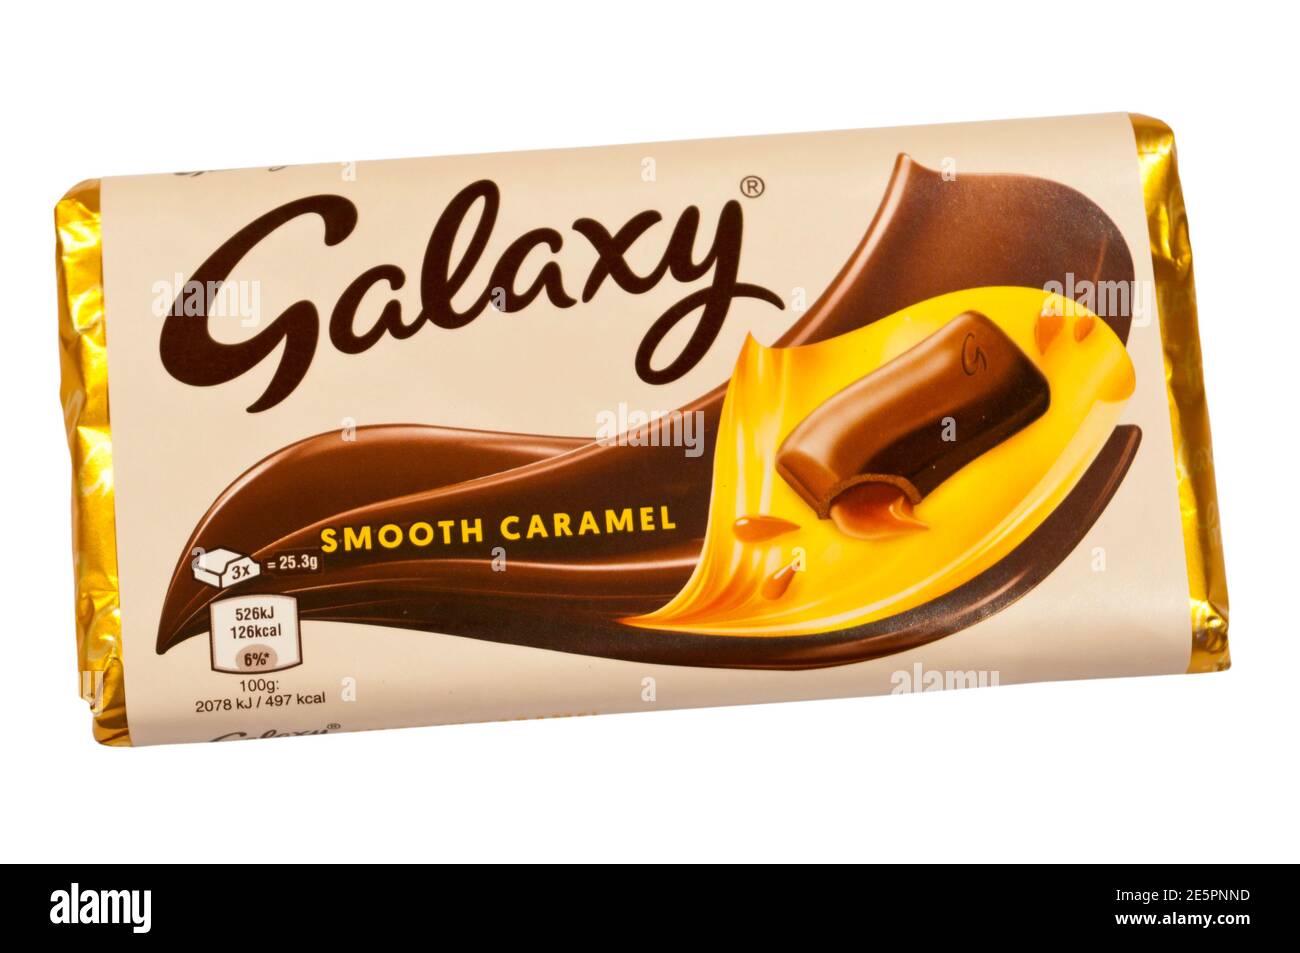 Bar of Galaxy Smooth Caramel Chocolate Stock Photo